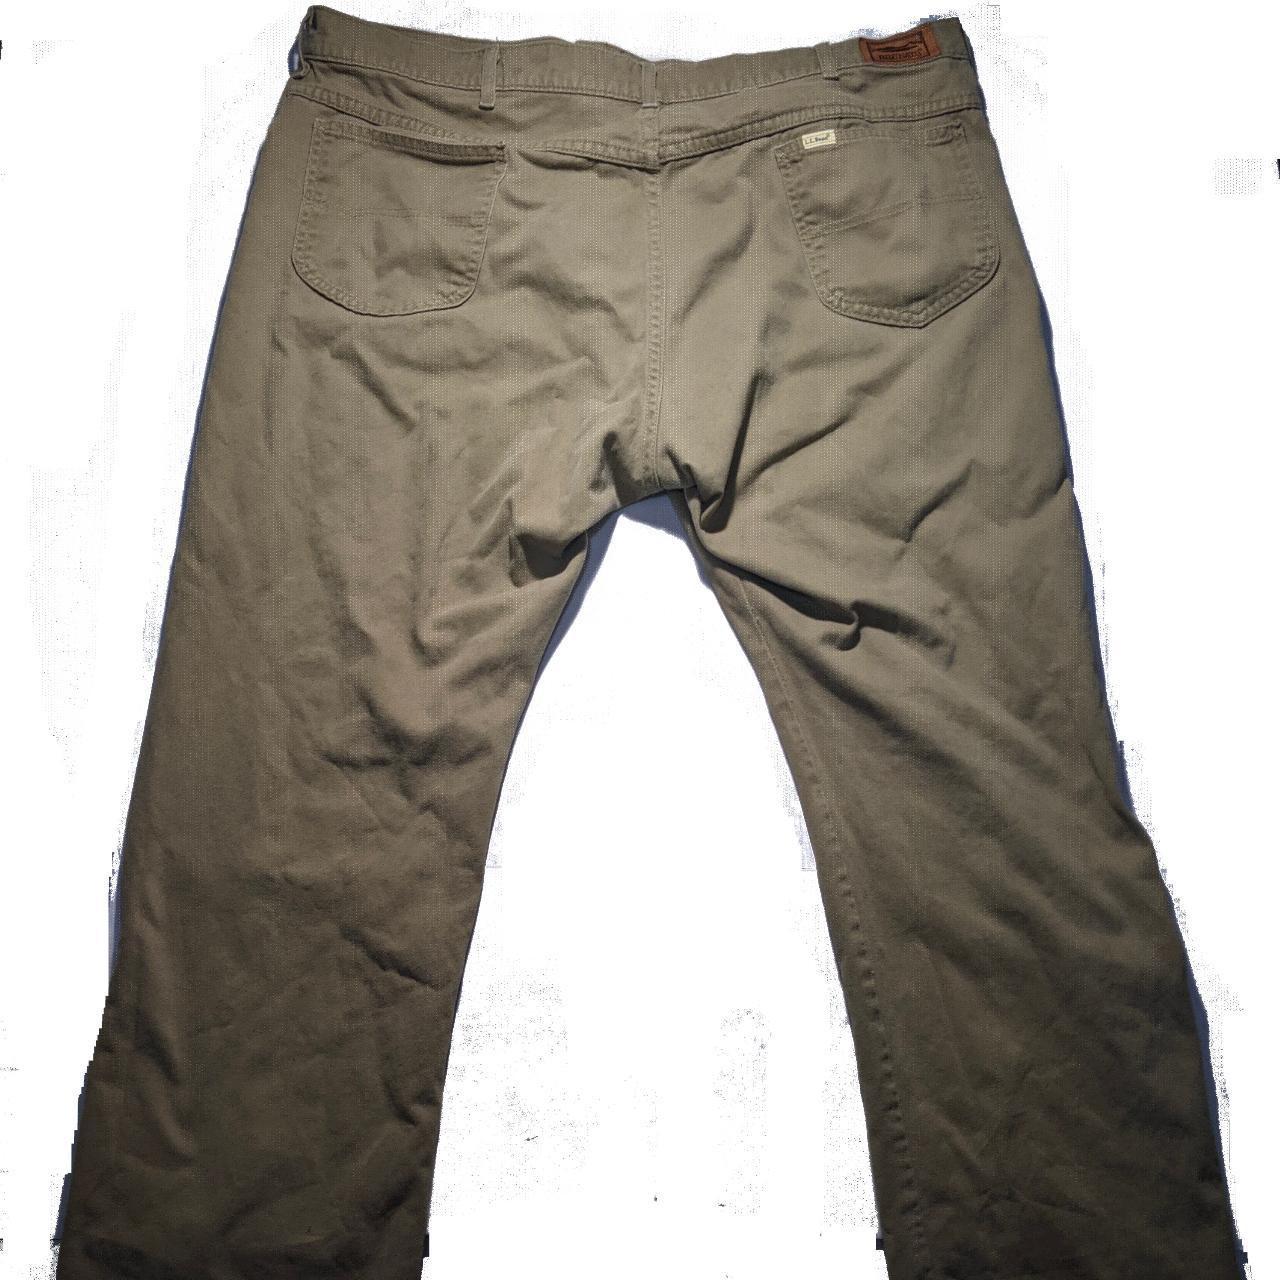 Vintage 80s/90s Orvis Hiking Pants Elastic Waist Made in USA Tan